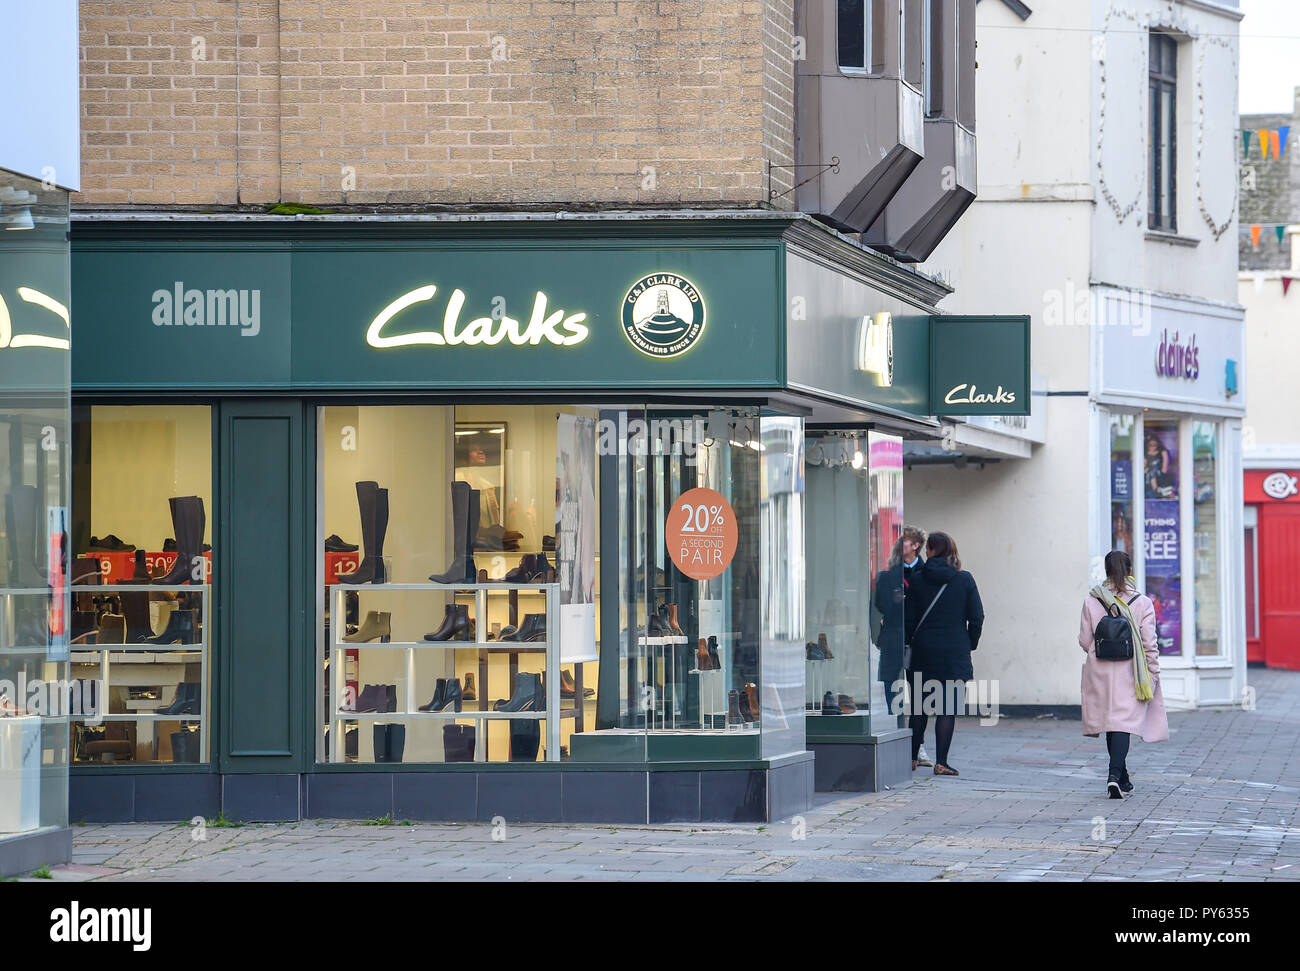 clarks shoes leicester city centre